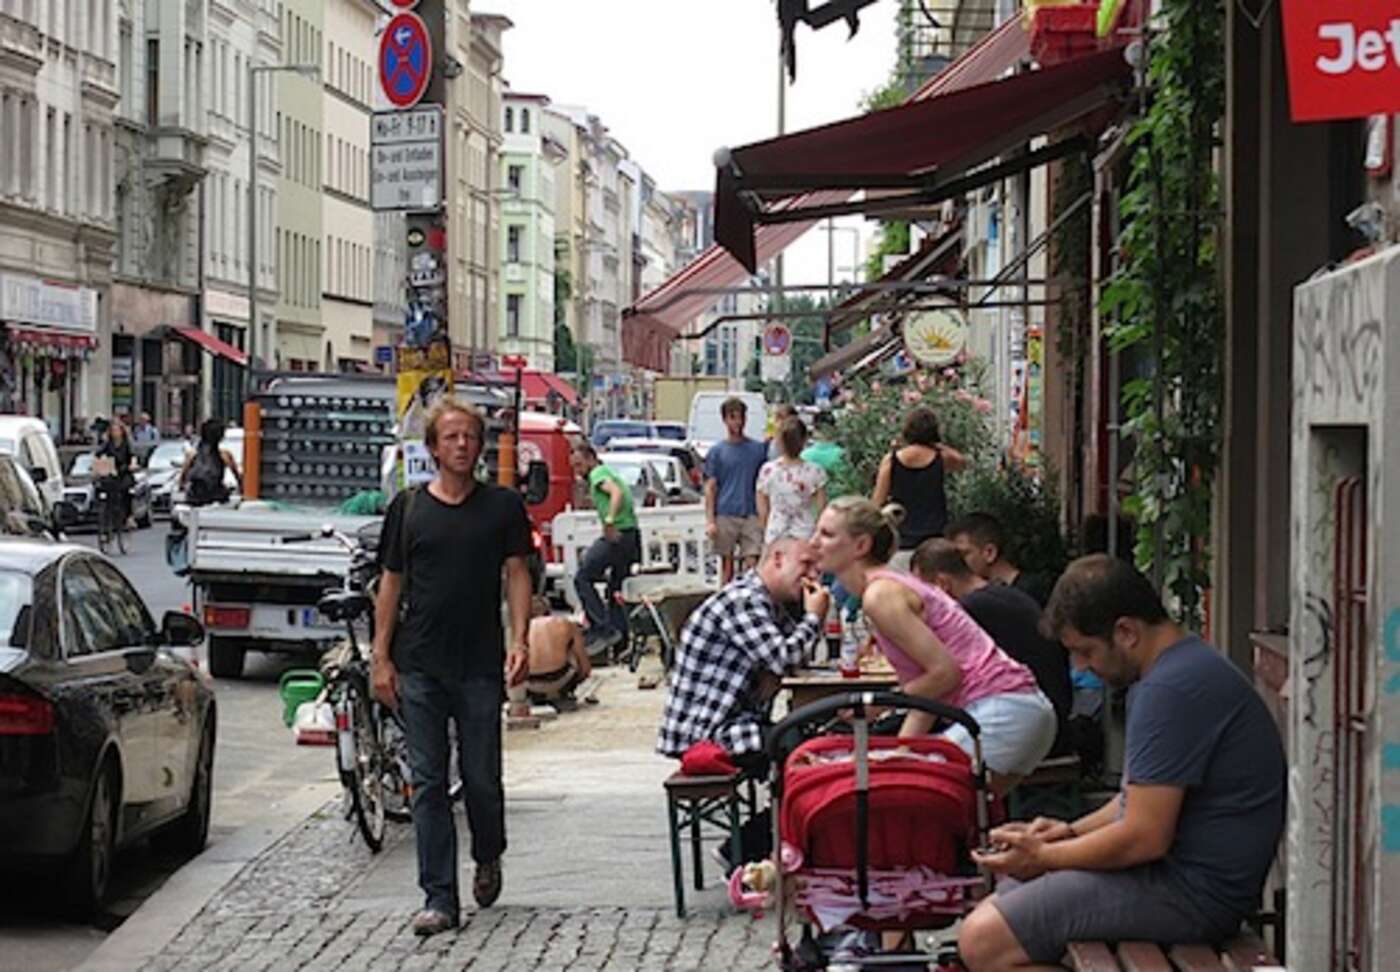 i've got this photo from here: https://www.eurocheapo.com/blog/berlin-kreuzbergs-best-affordable-sights-bars-and-restaurants.html